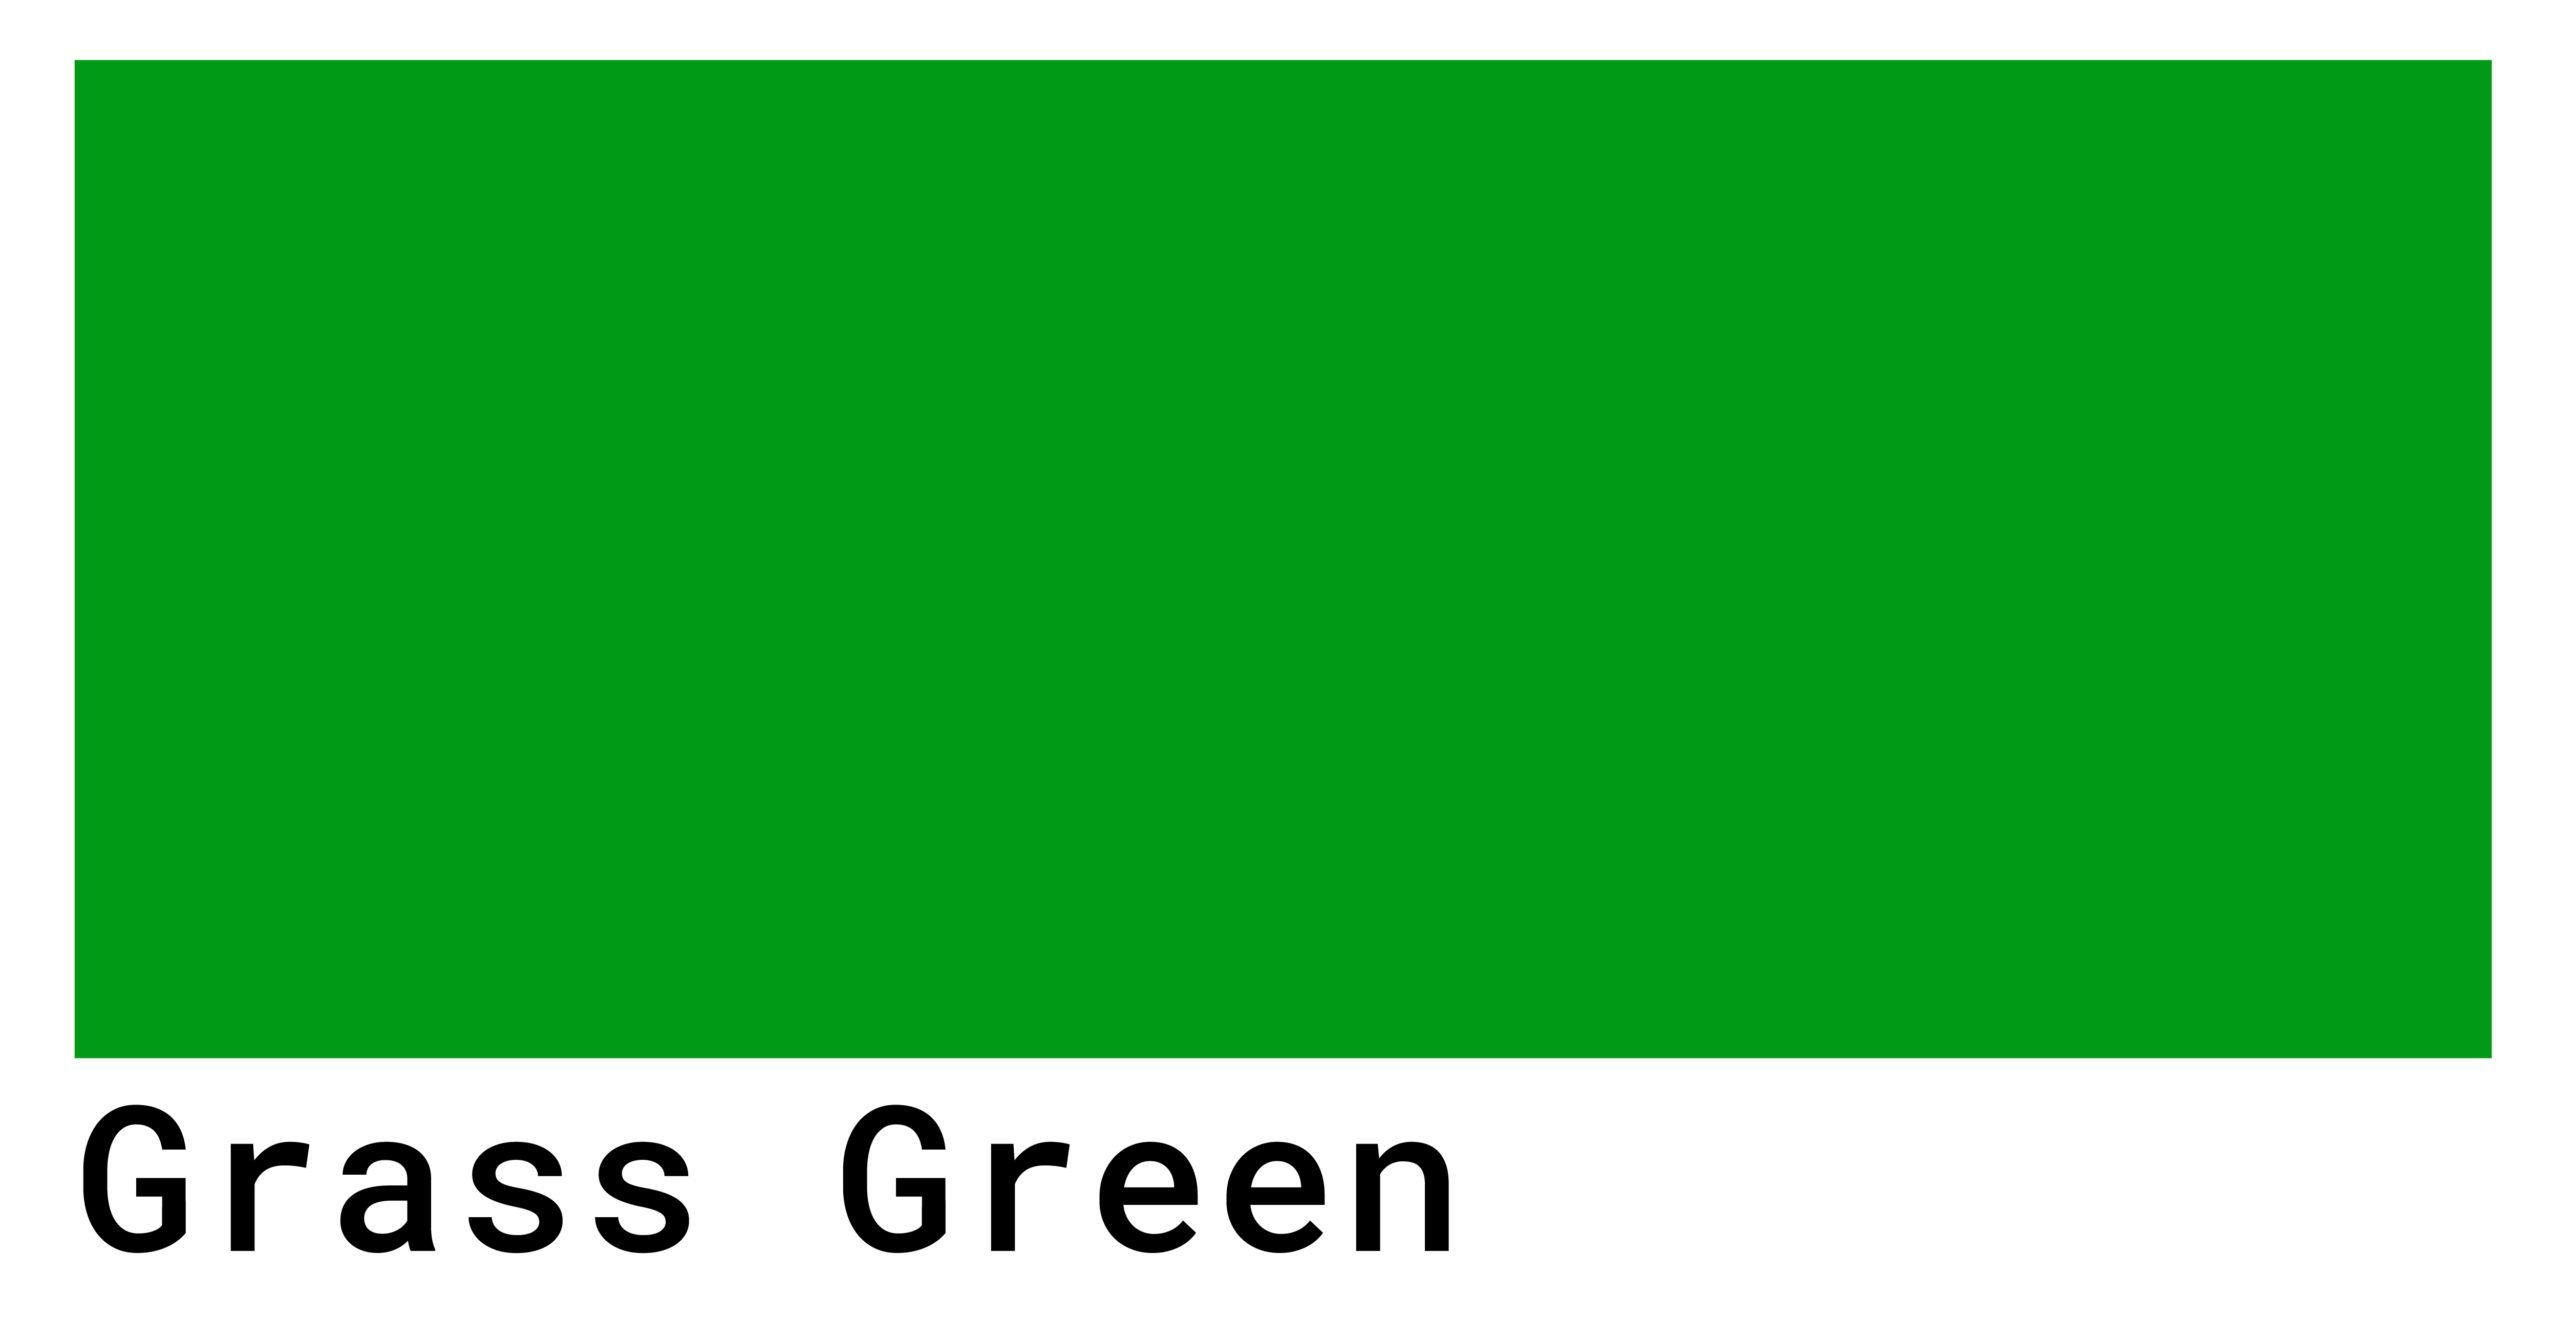 Код темно зеленого цвета. Зеленый цвет. Forest Green цвет. RGB зеленый. Травяной зеленый цвет.